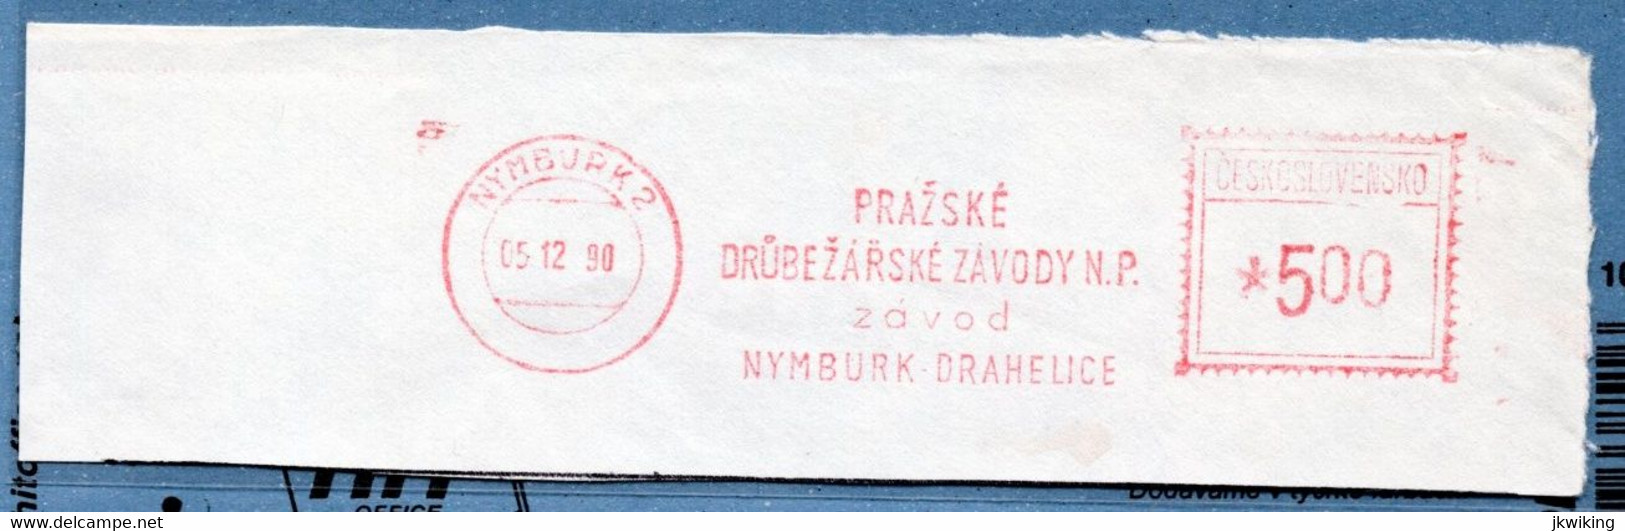 Postage Stamp - Poultry Farms - Poultry - Hens - Nymburk 2 - 5.12.1990 - Afstempelingen & Vlagstempels